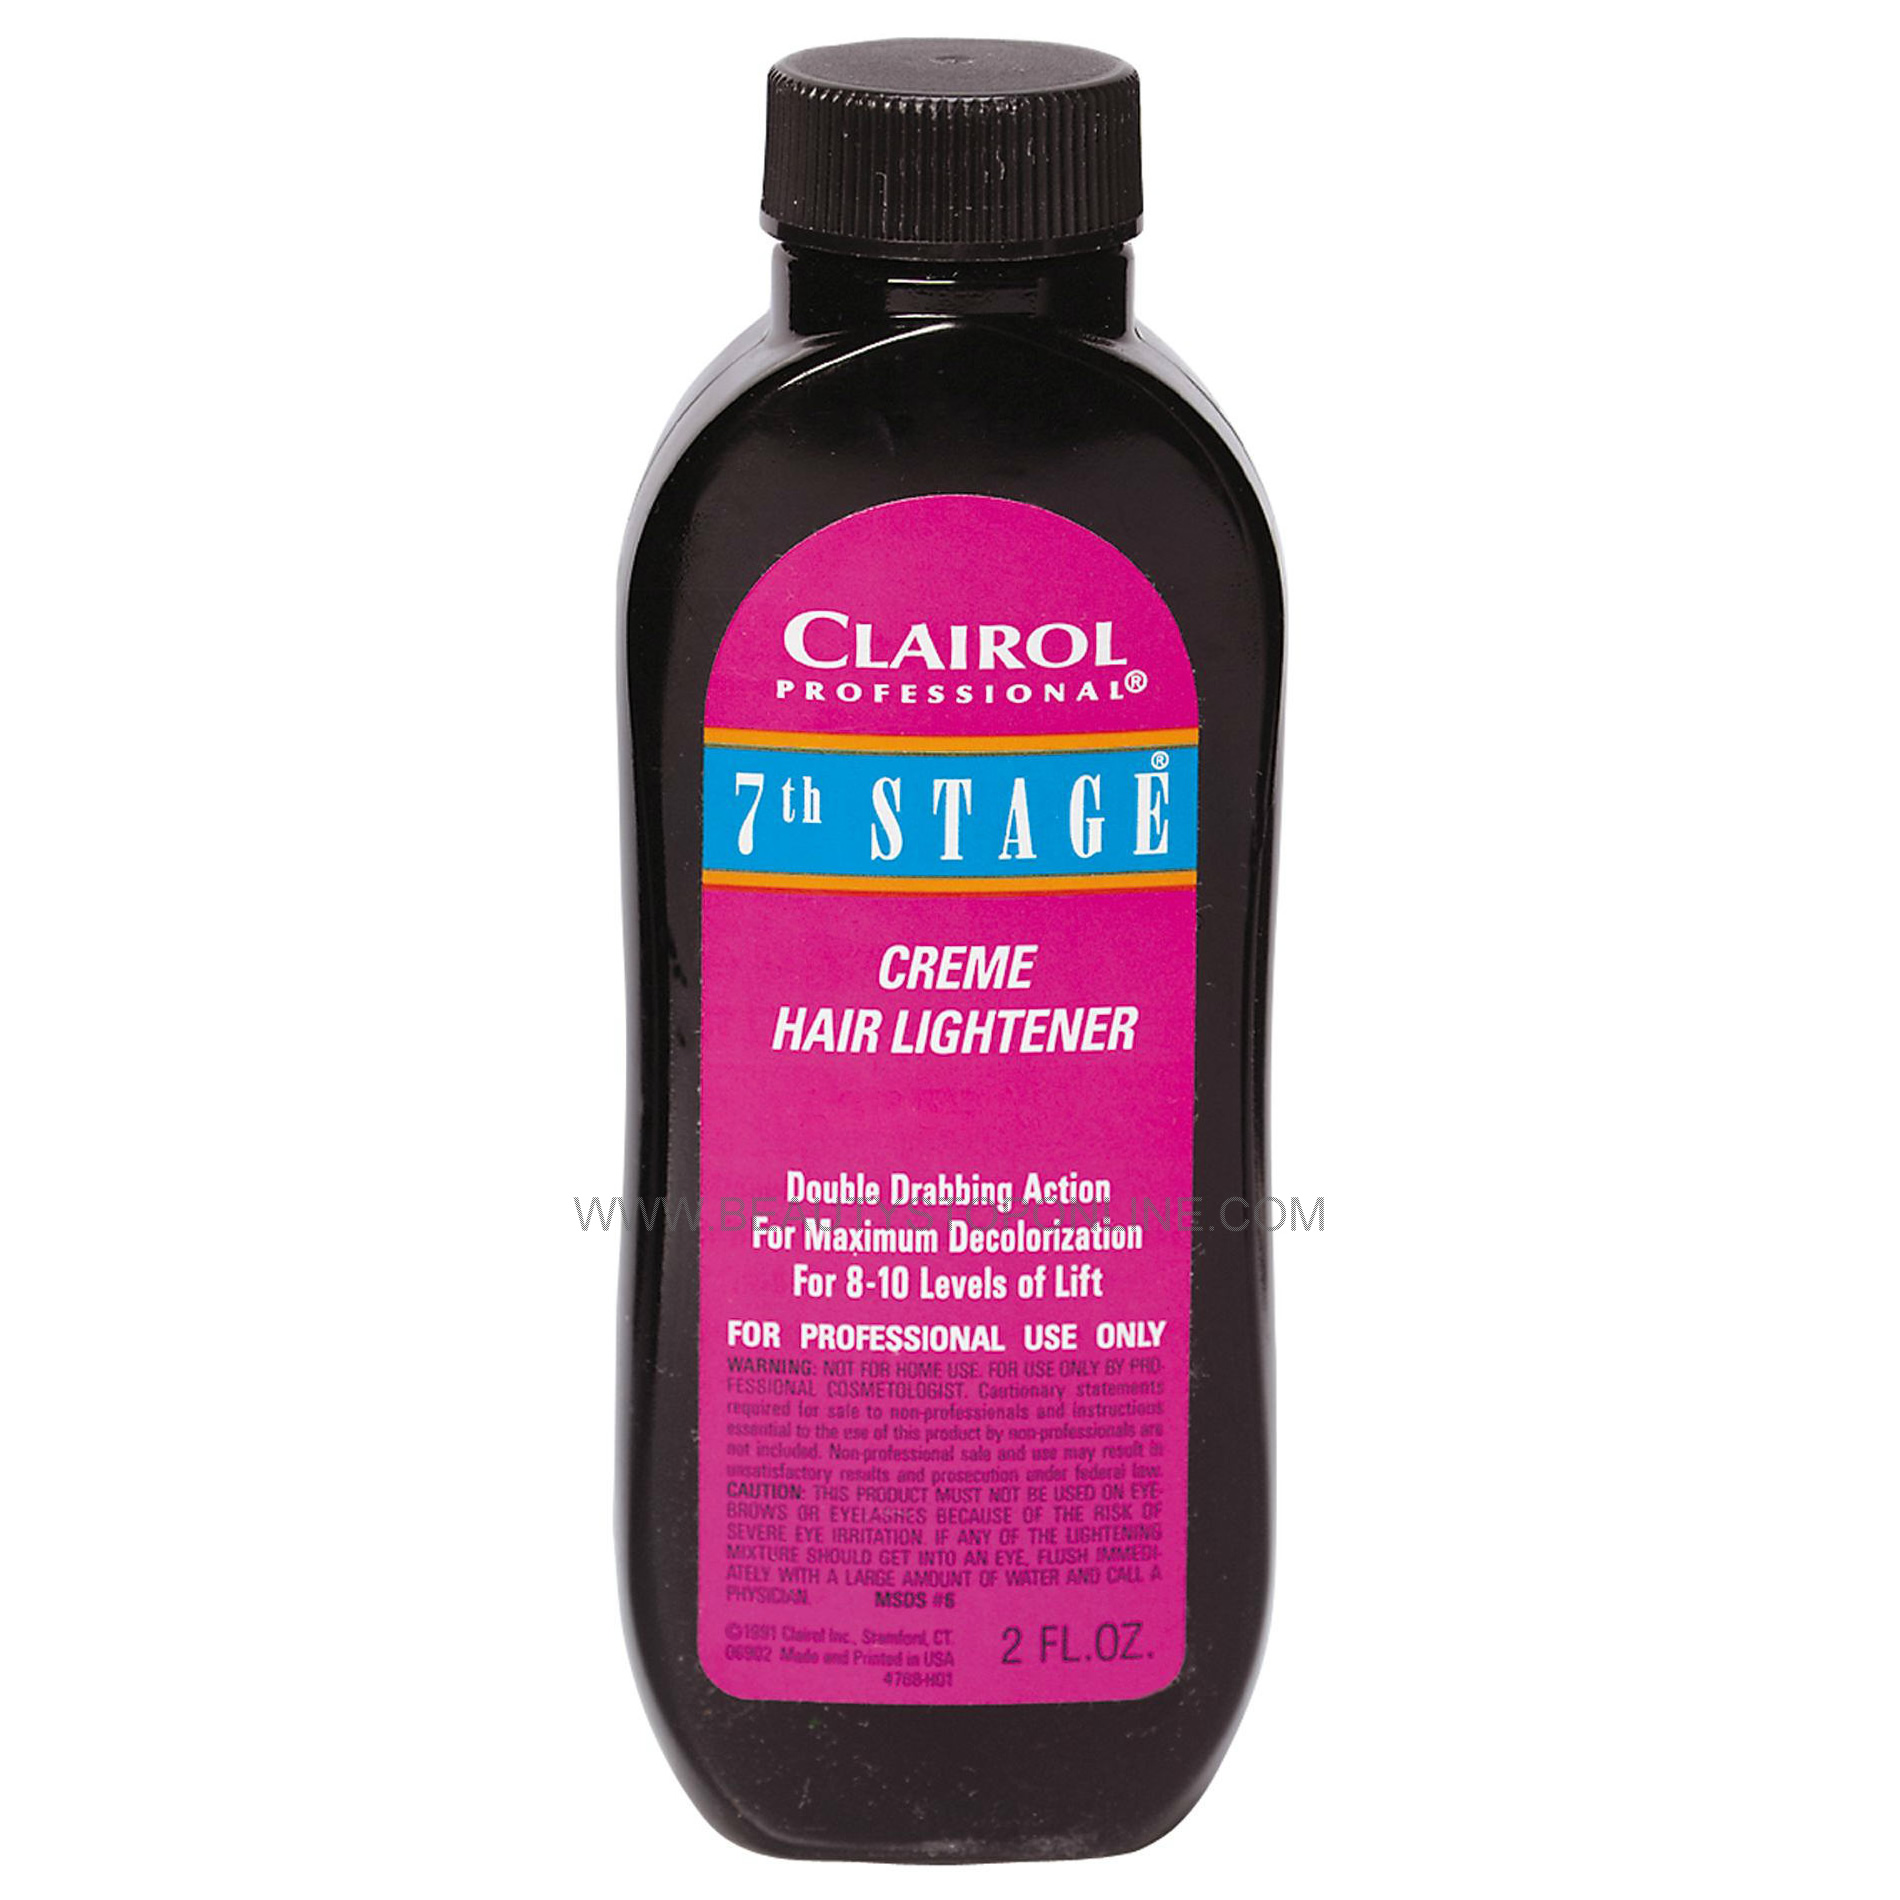 Clairol 7th Stage Creme Hair Lightener